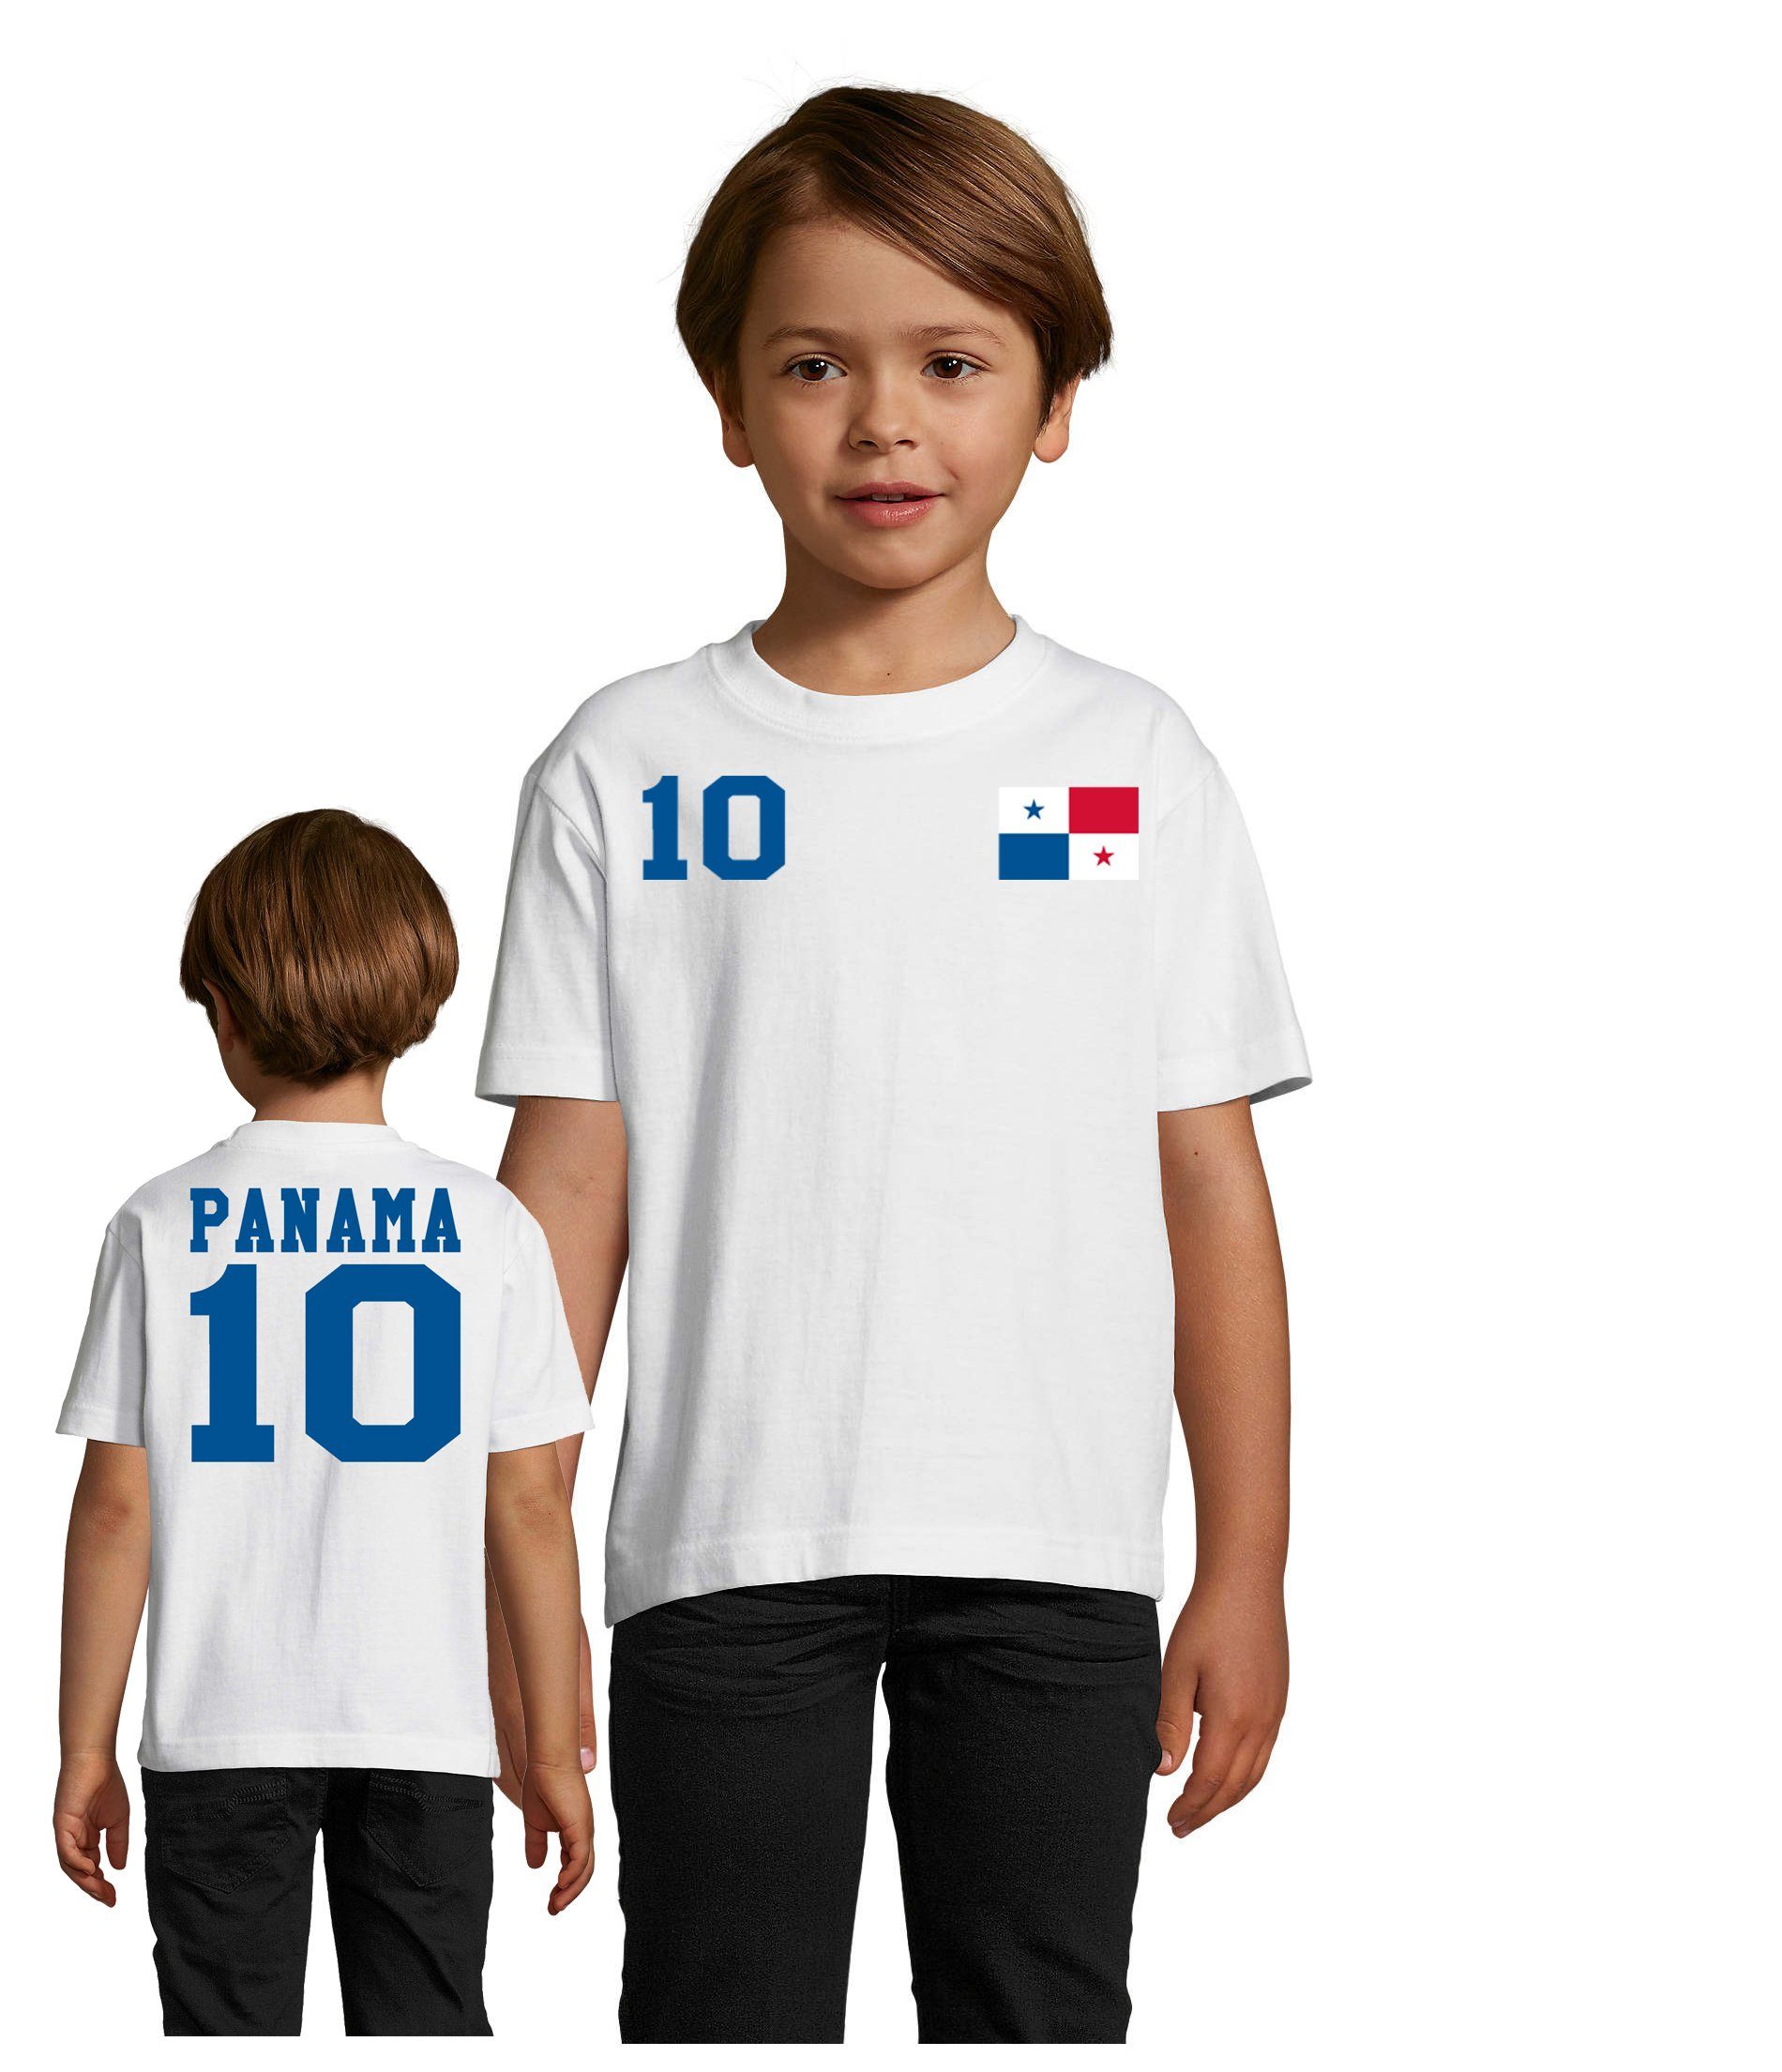 Trikot Kinder Panama WM Brownie Blondie Fußball Fun Sport Fan & Meister Copa America T-Shirt